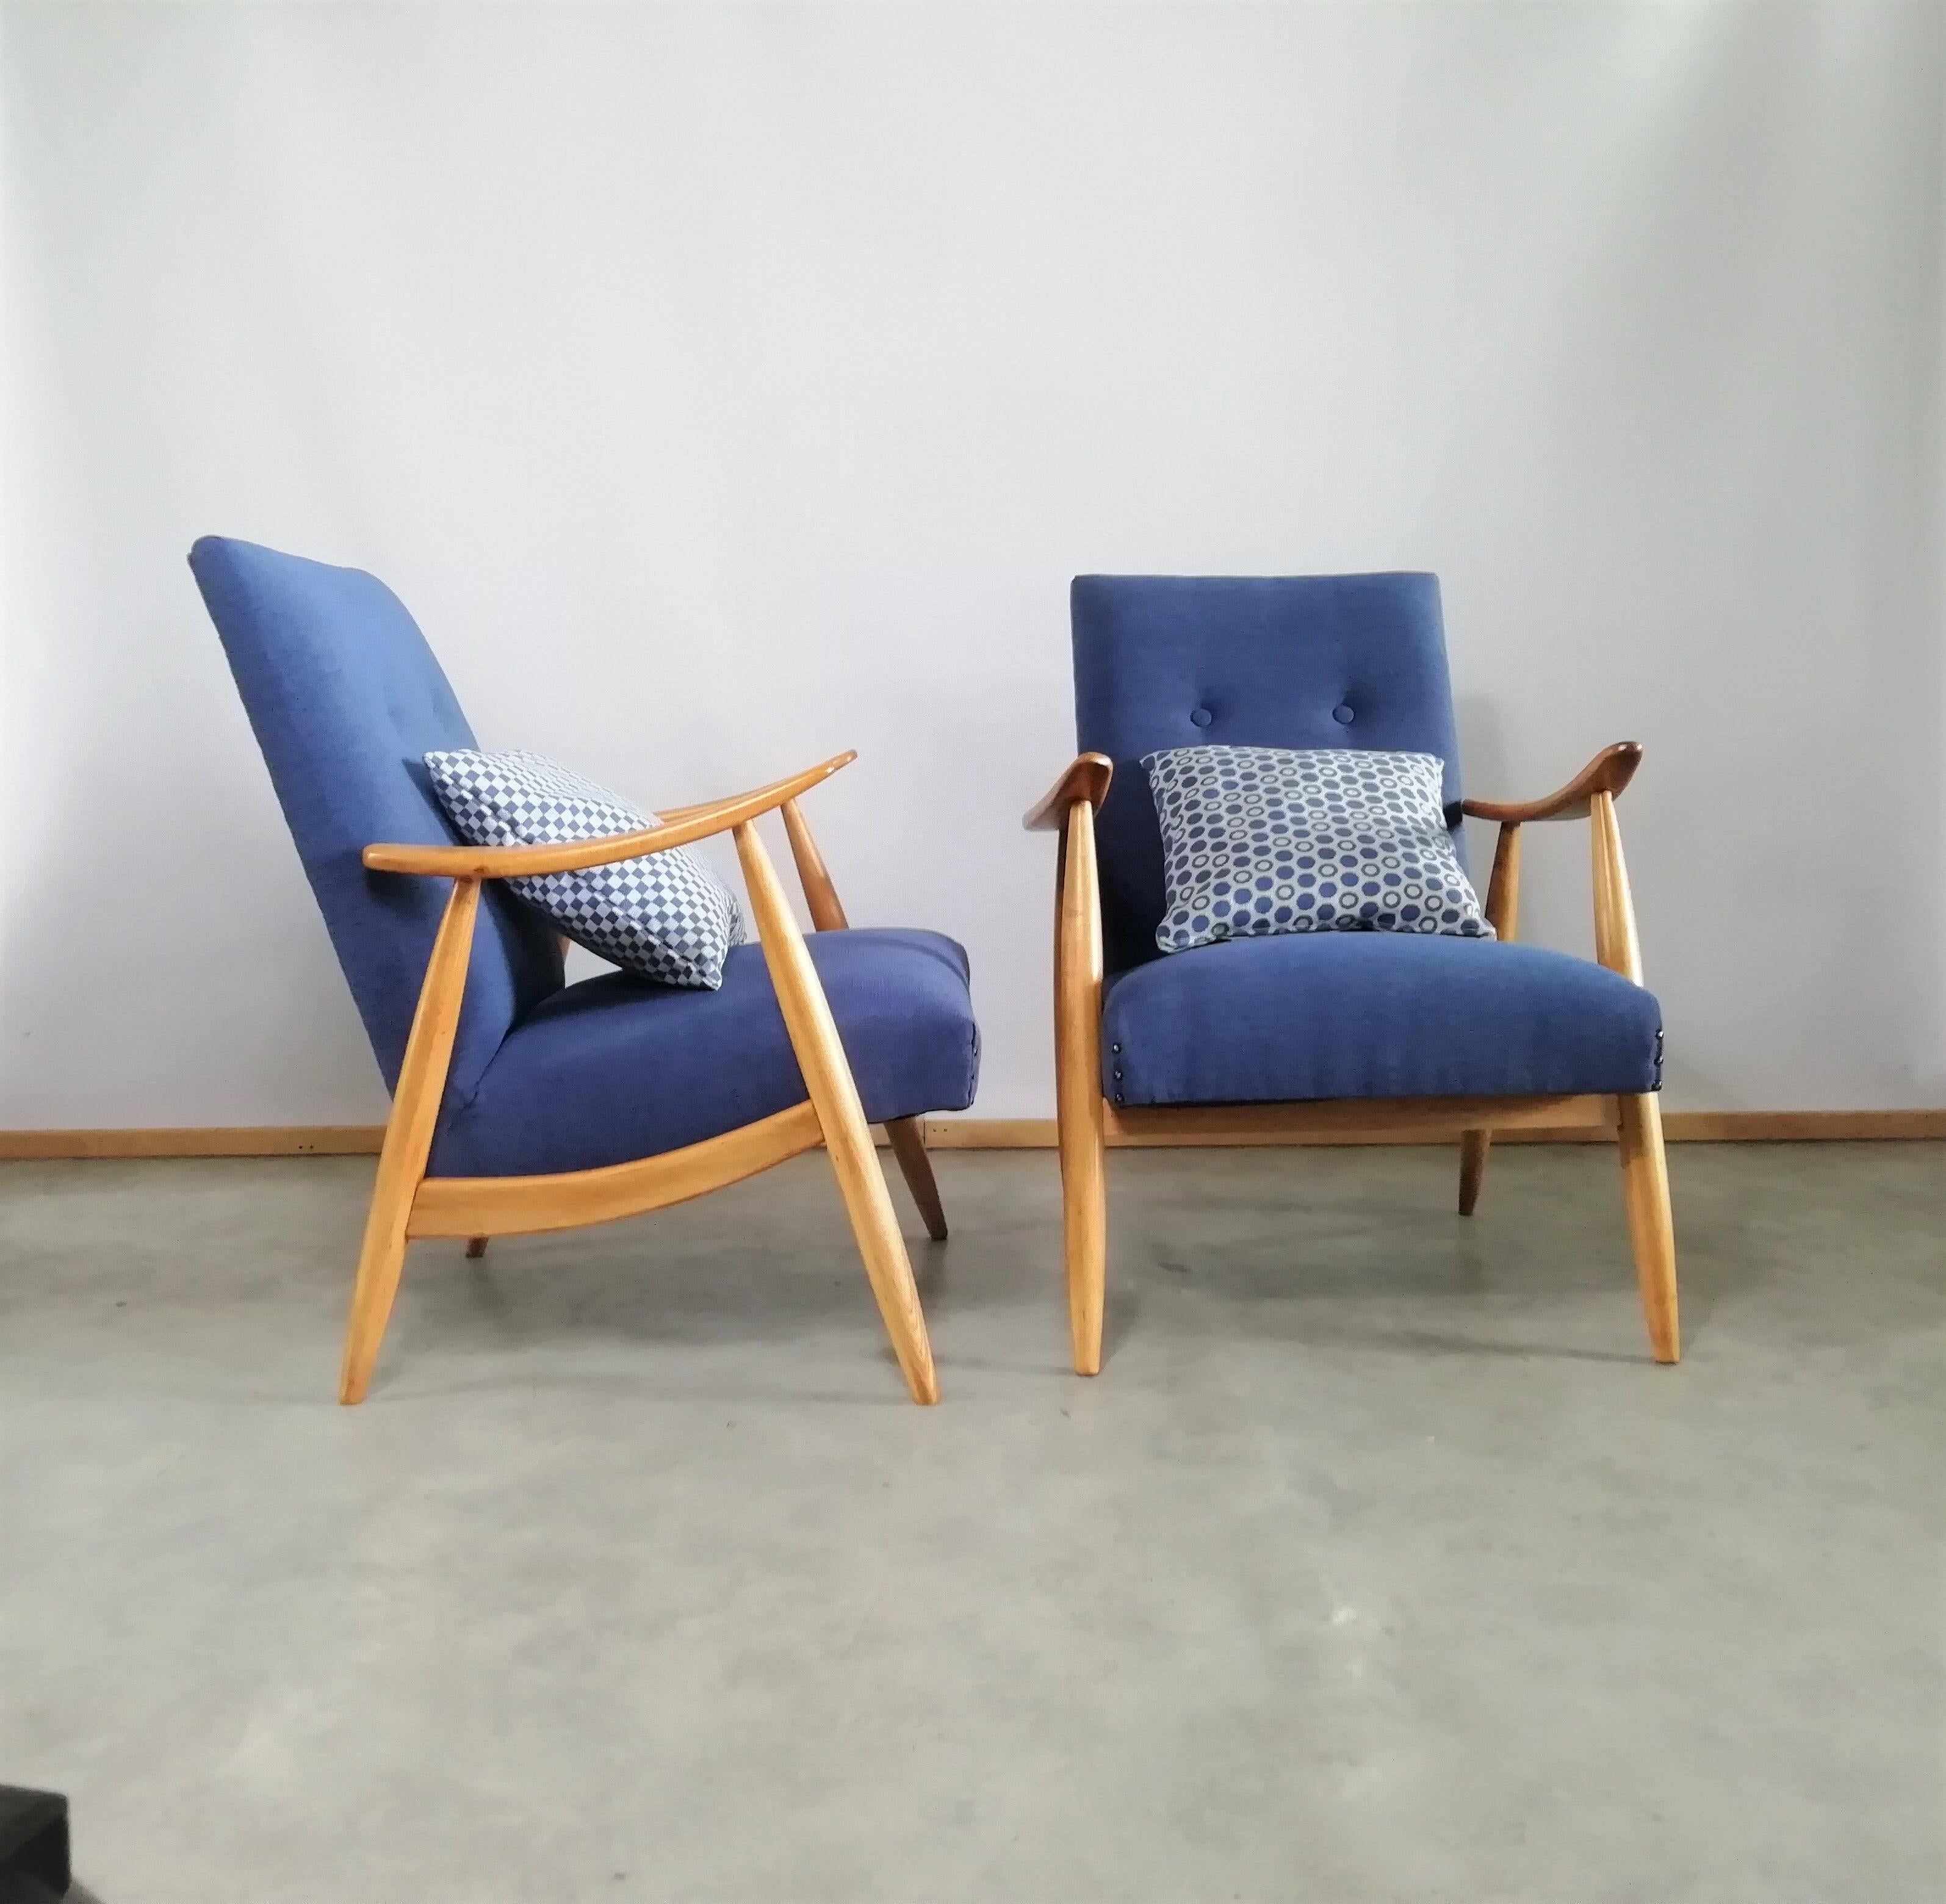 Scandinavian Modern Pair of Easy Chairs by Louis Van Teeffelen for Wébé